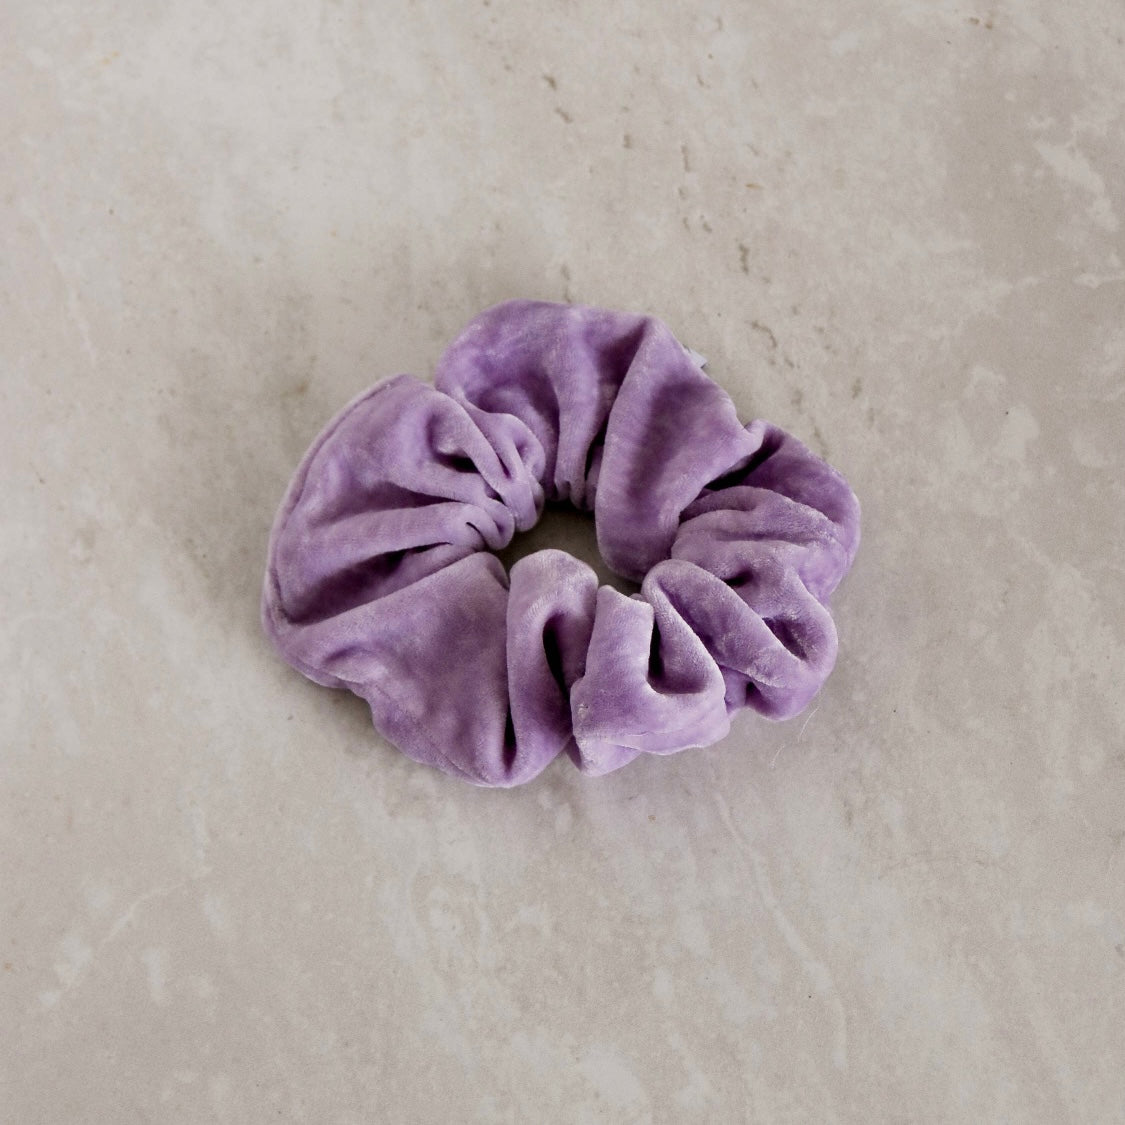 Rosemarine • Naturally-dyed Silk Velvet Scrunchies • Pick Your Color